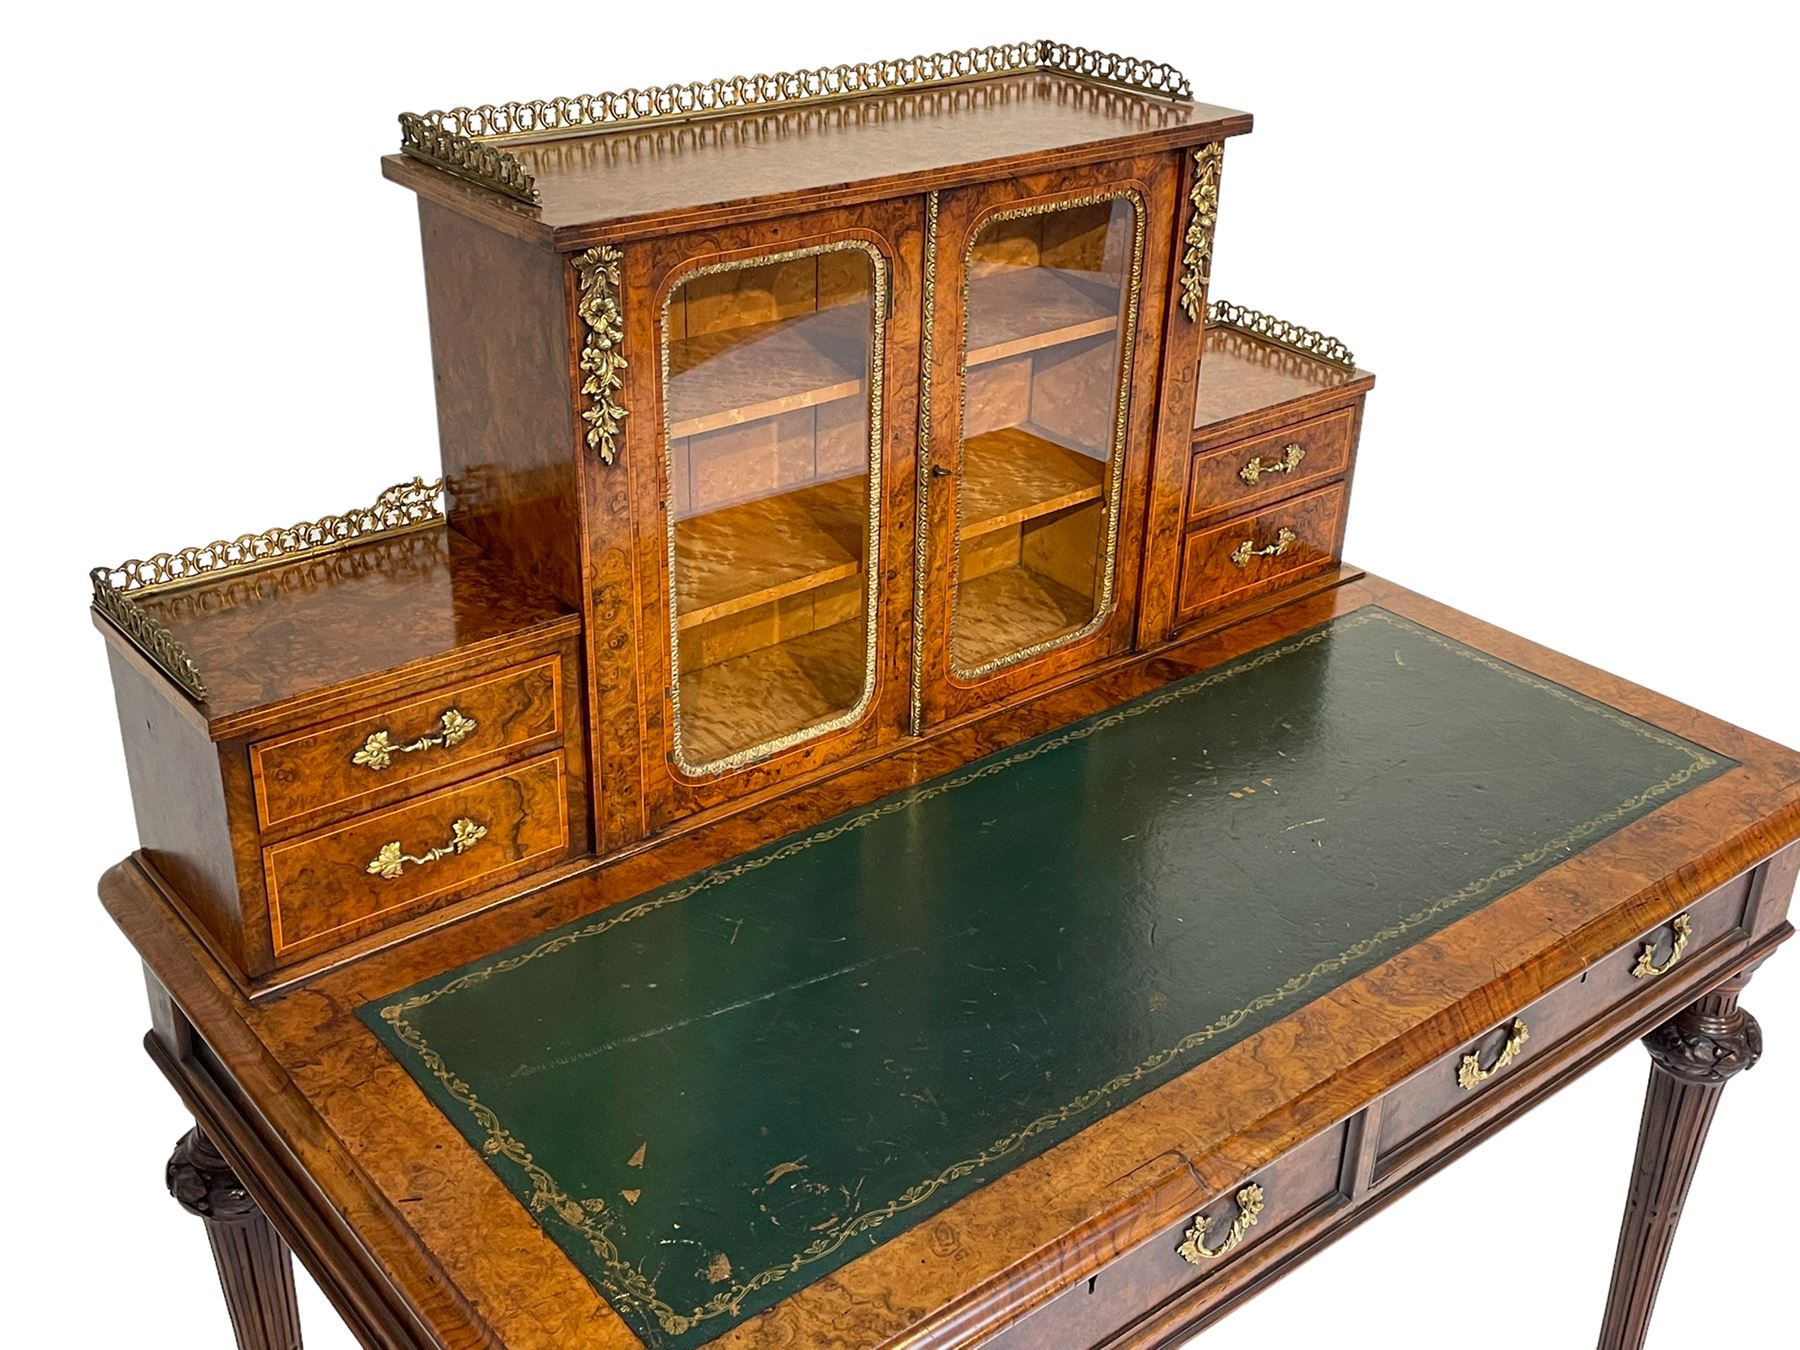 19th century figured walnut lady's writing desk or Bonheur du Jour - Image 9 of 14